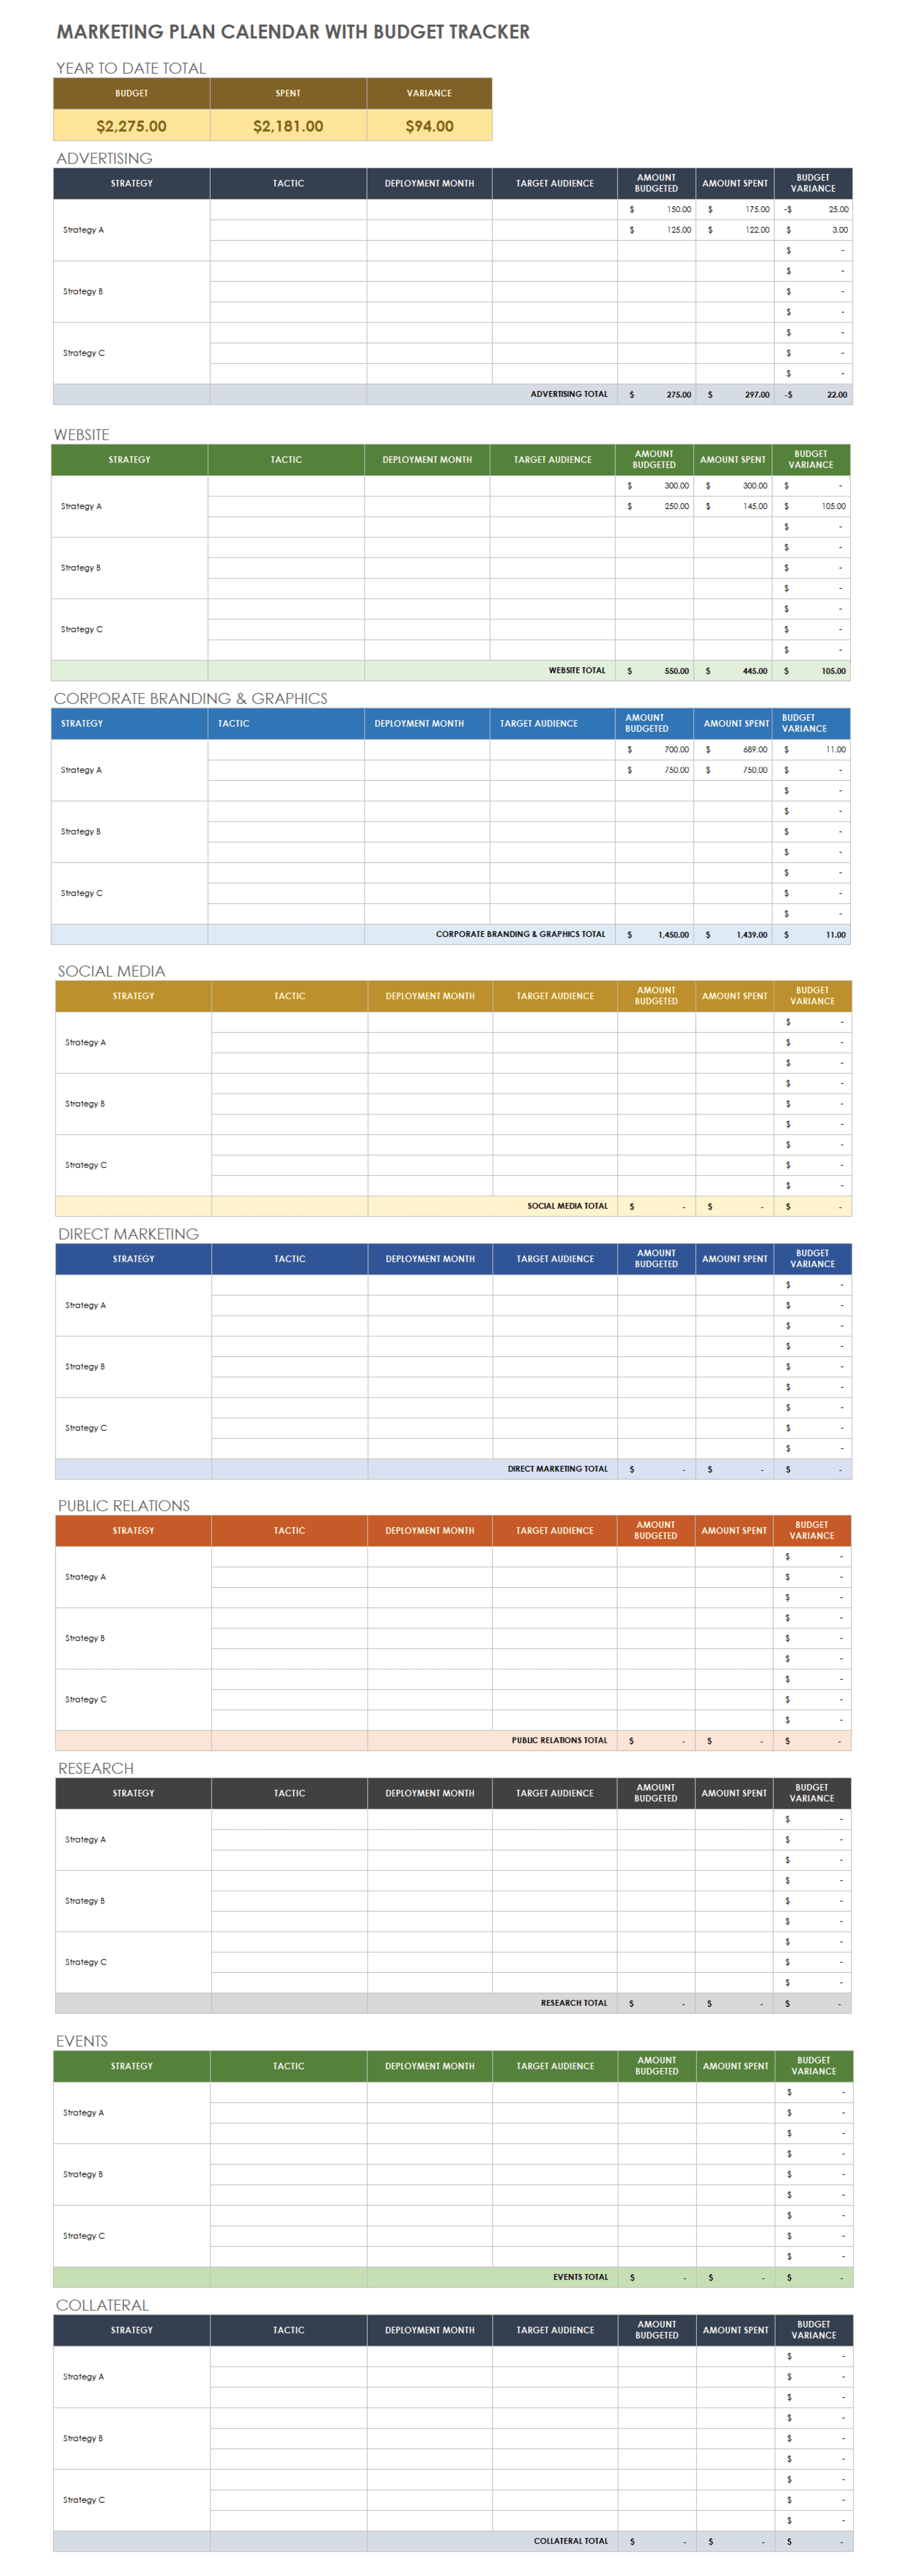 Marketing Plan Calendar with Budget Tracker Template